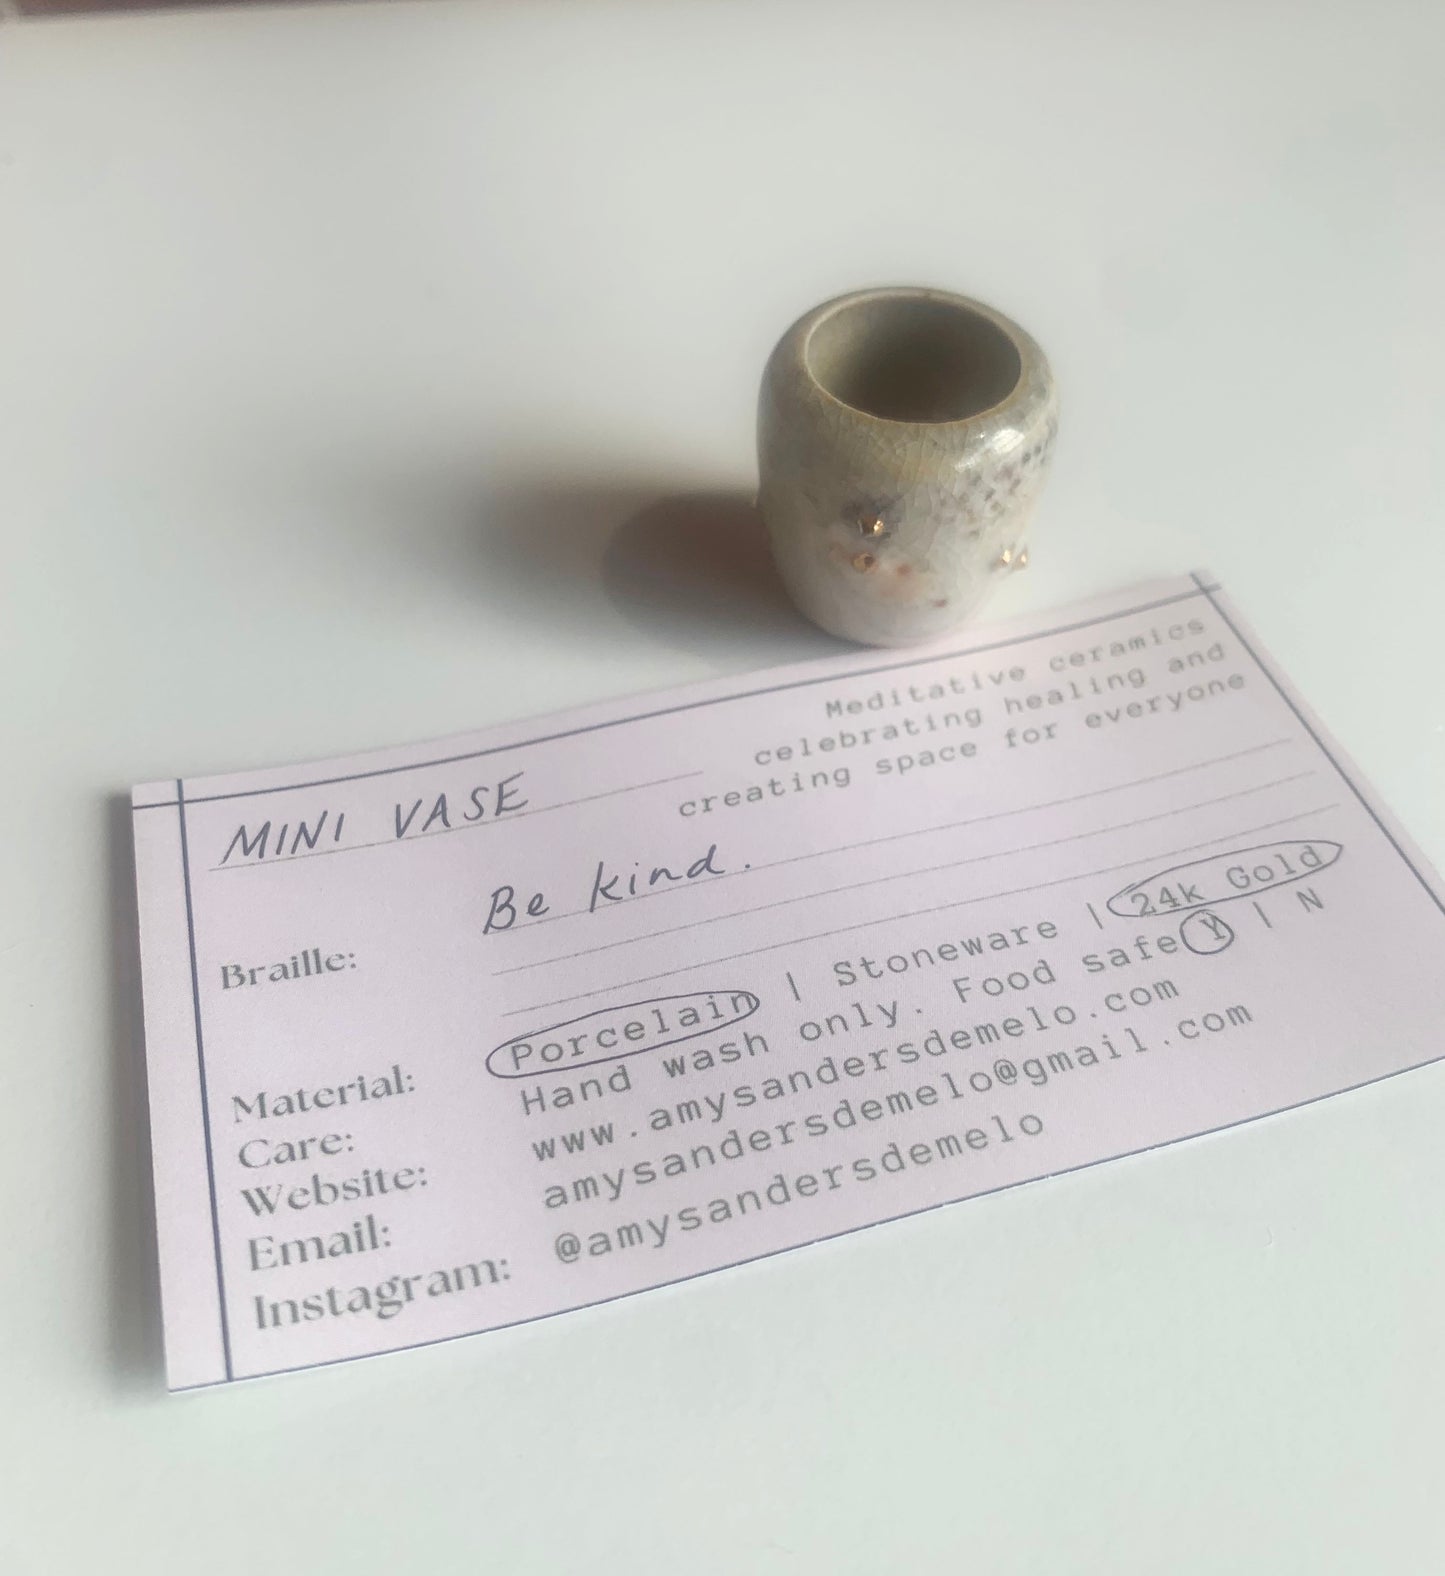 Miniature Meditation Vase "Be Kind" | Amy Sanders de Melo